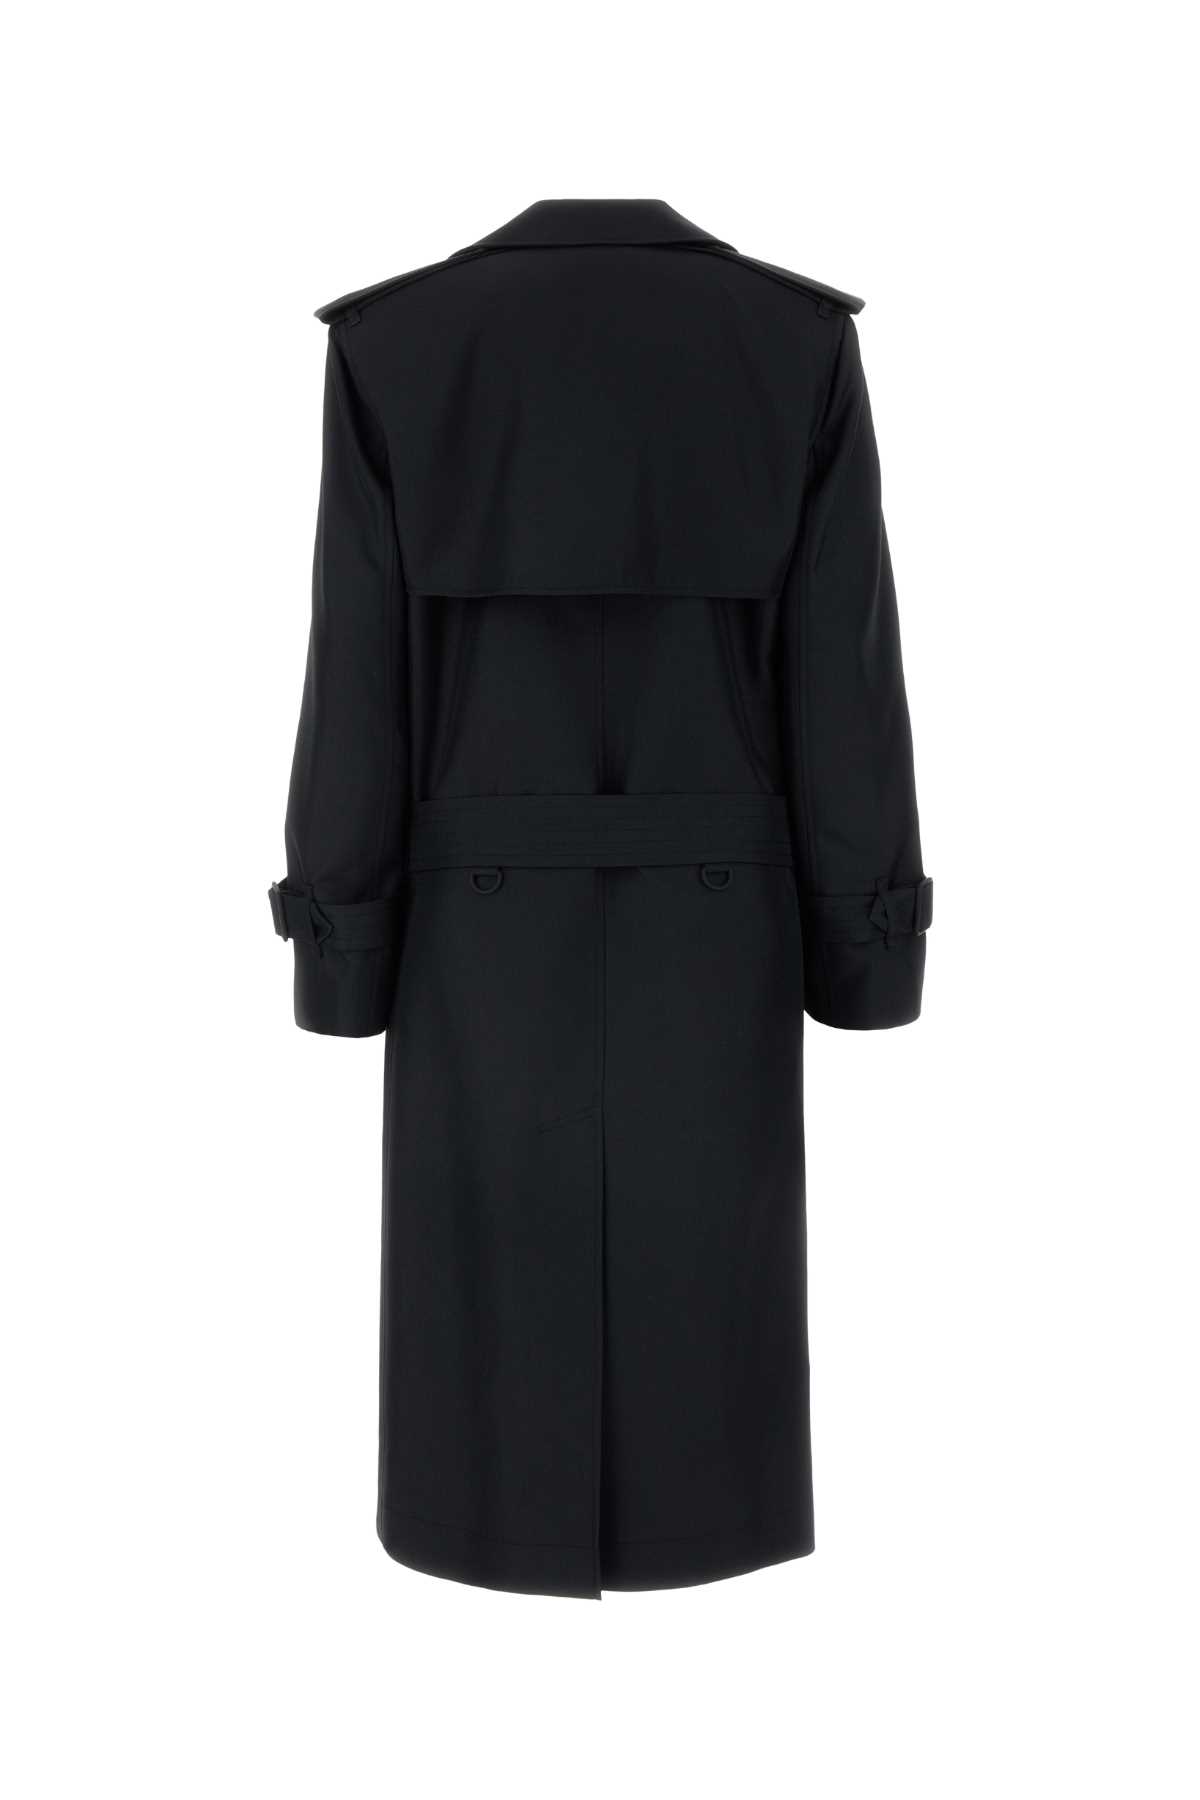 Shop Burberry Black Silk Blend Trench Coat